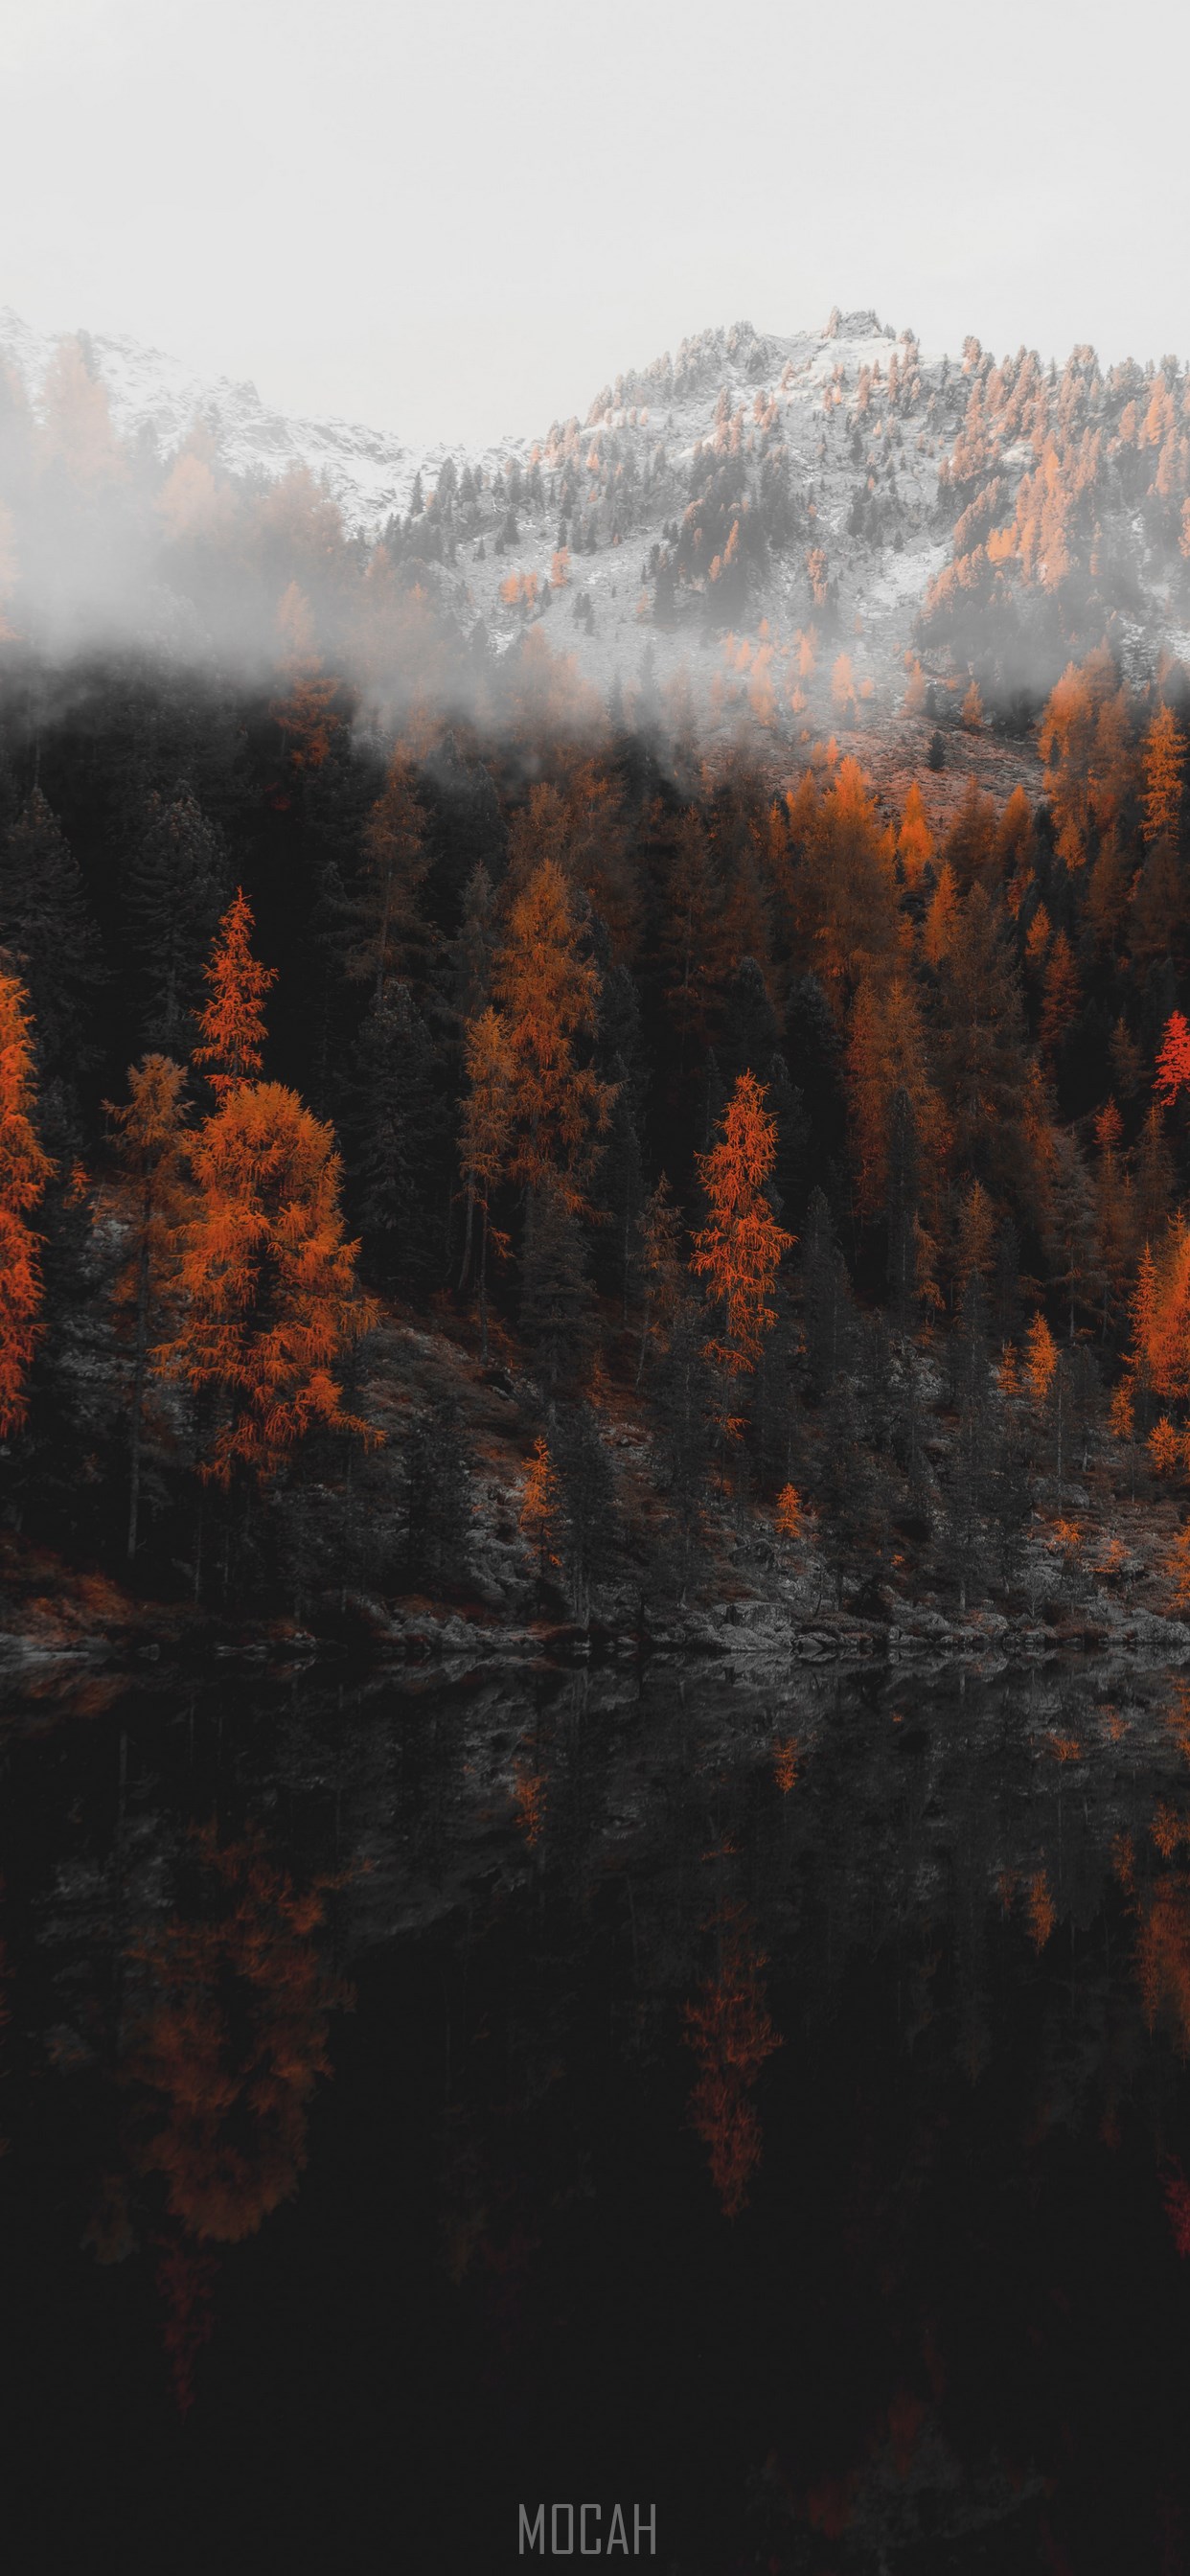 Reflection, Nature, Tree, Wilderness, Leaf, Apple iPhone 11 Pro Max screensaver hd, 1242x2688 HD Wallpaper